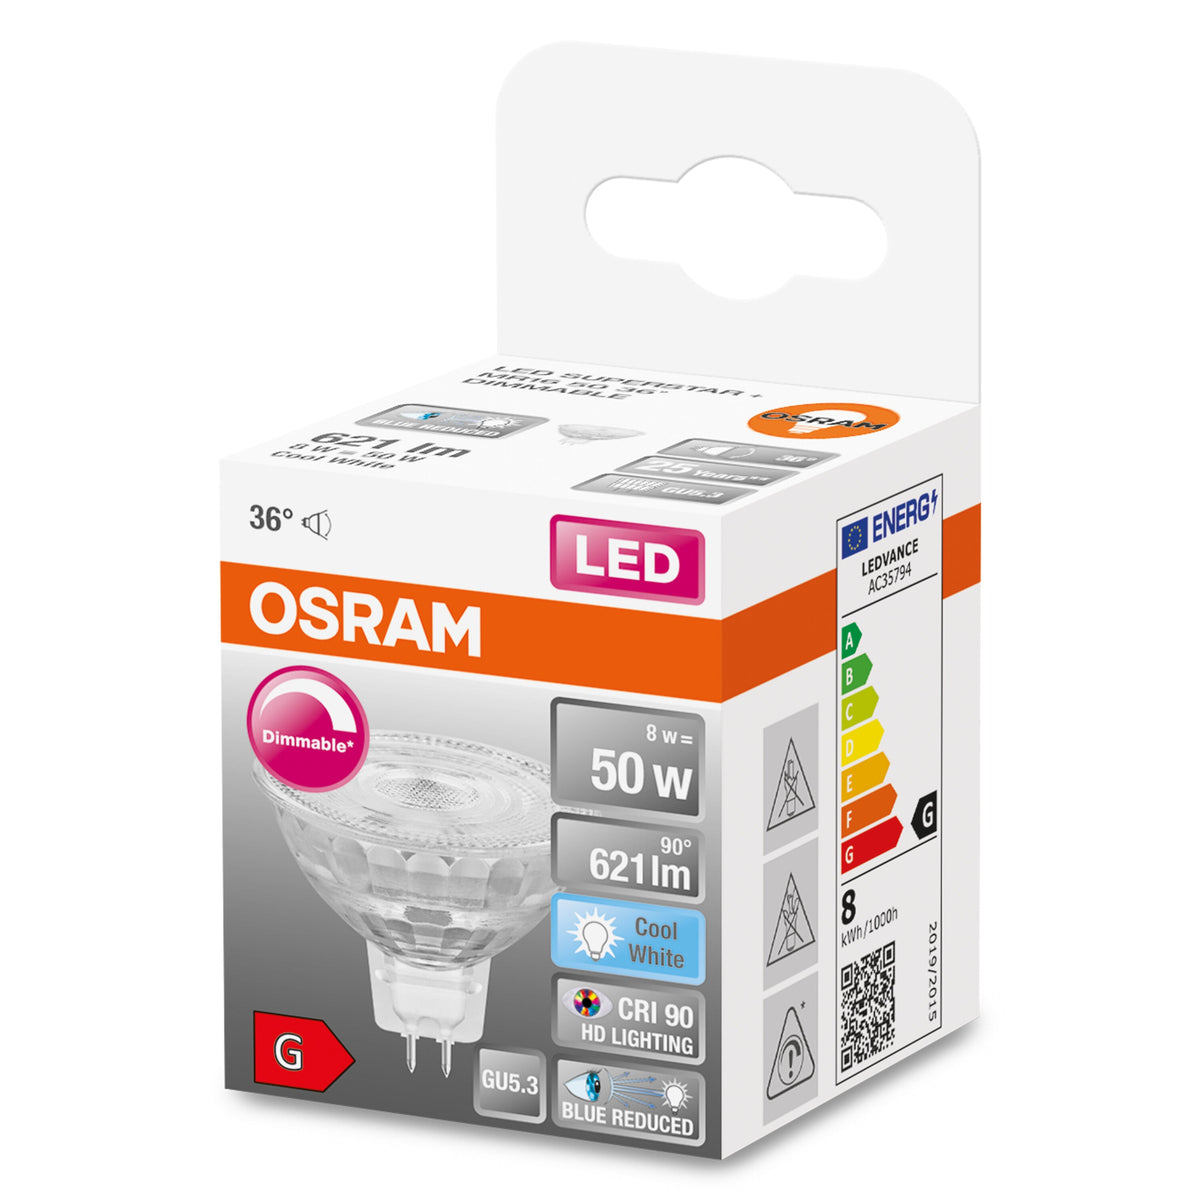 Lampada con riflettore LED dimmerabile OSRAM LED SUPERSTAR + spot MR16 GL 50 DIM 8W/940 GU5.3 CRI90 BOX